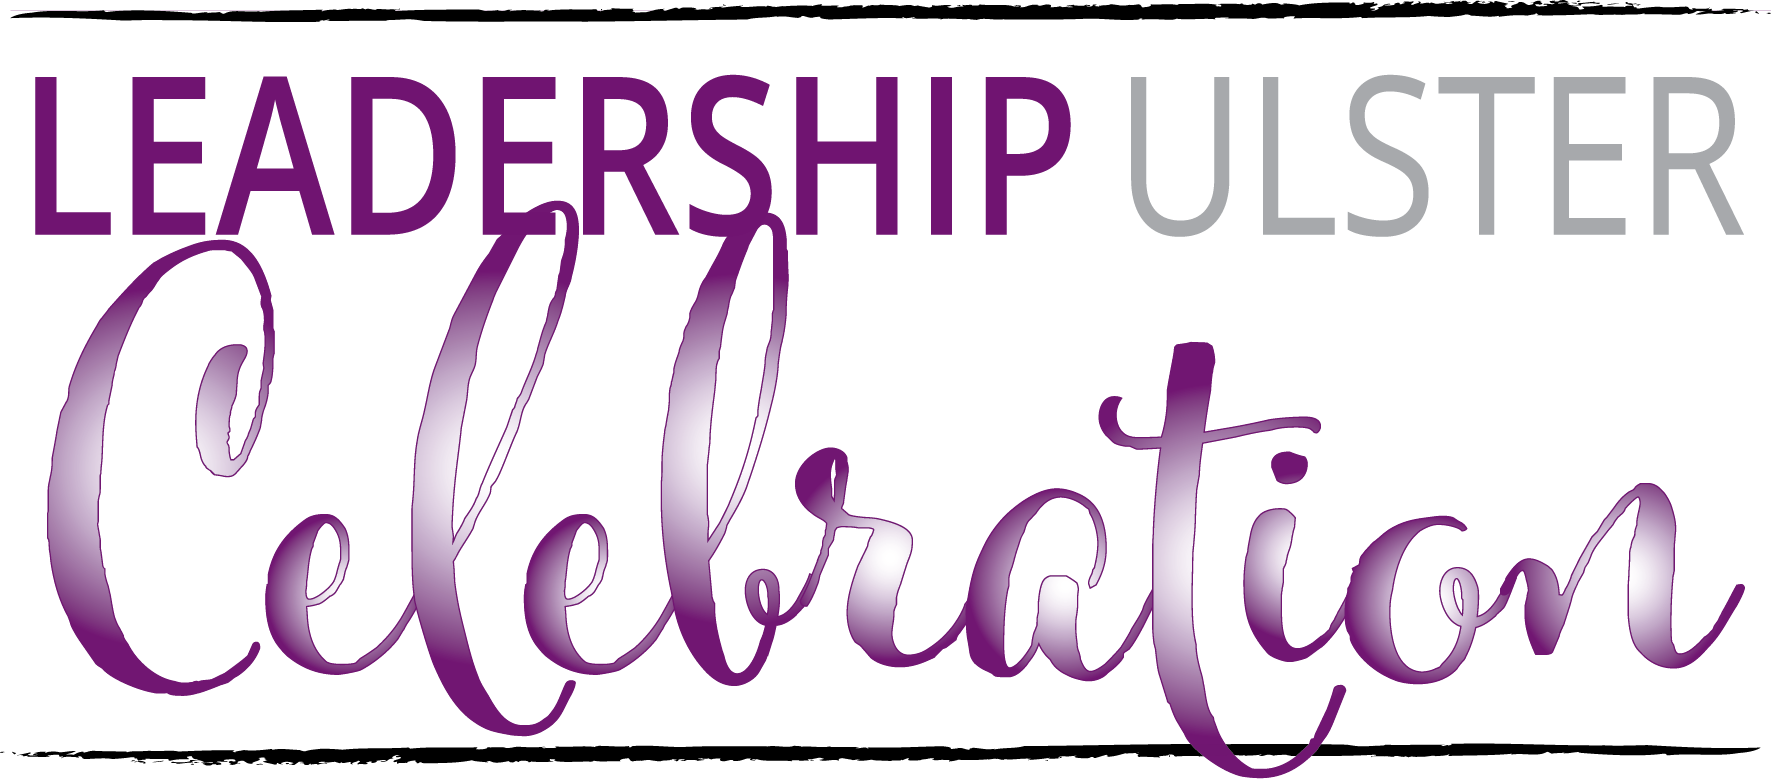 Leadership Ulster Celebration logo